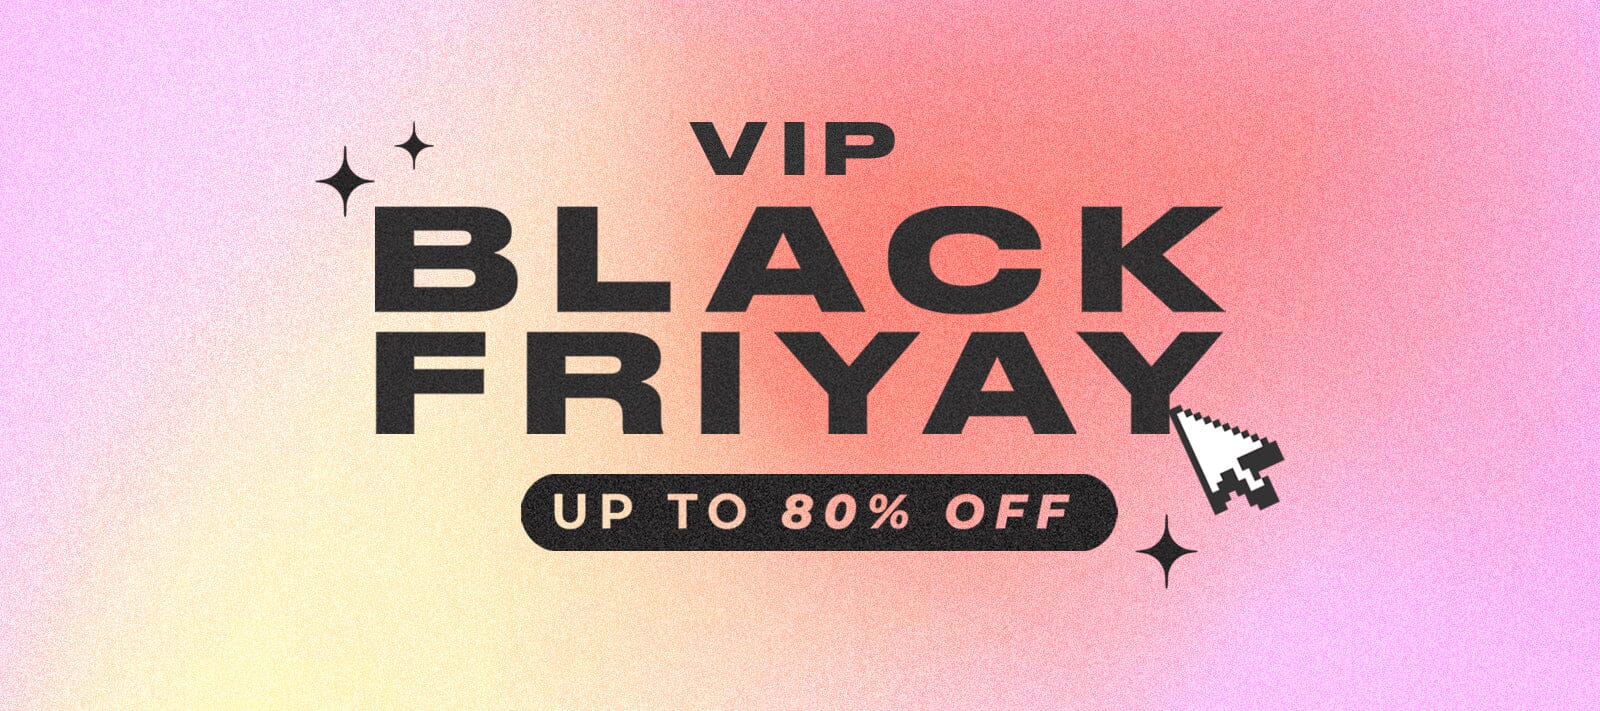 VIP Black Friday Early Access